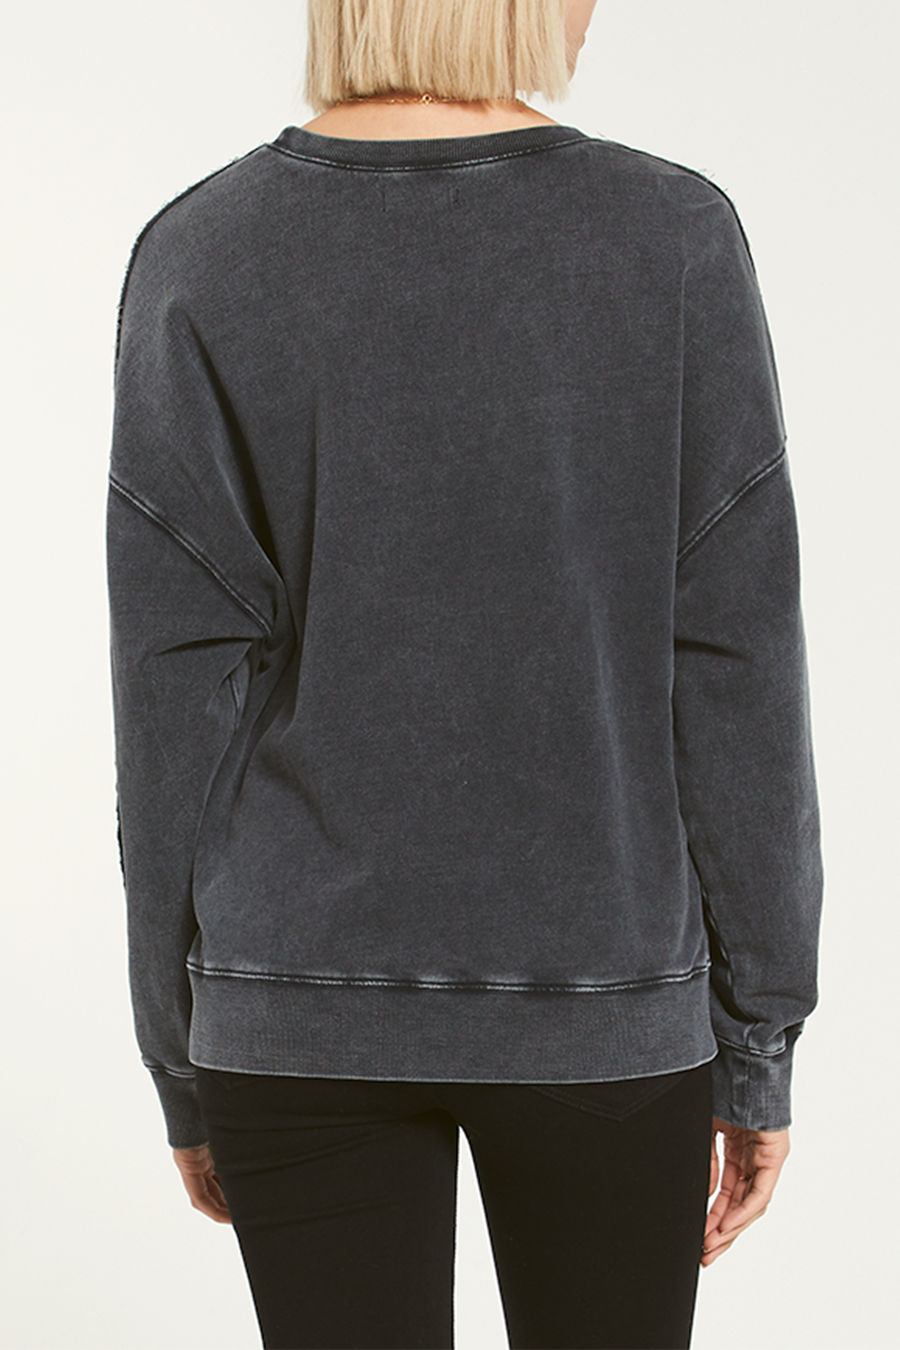 Kyro Sweatshirt | Washed Black - Main Image Number 3 of 3